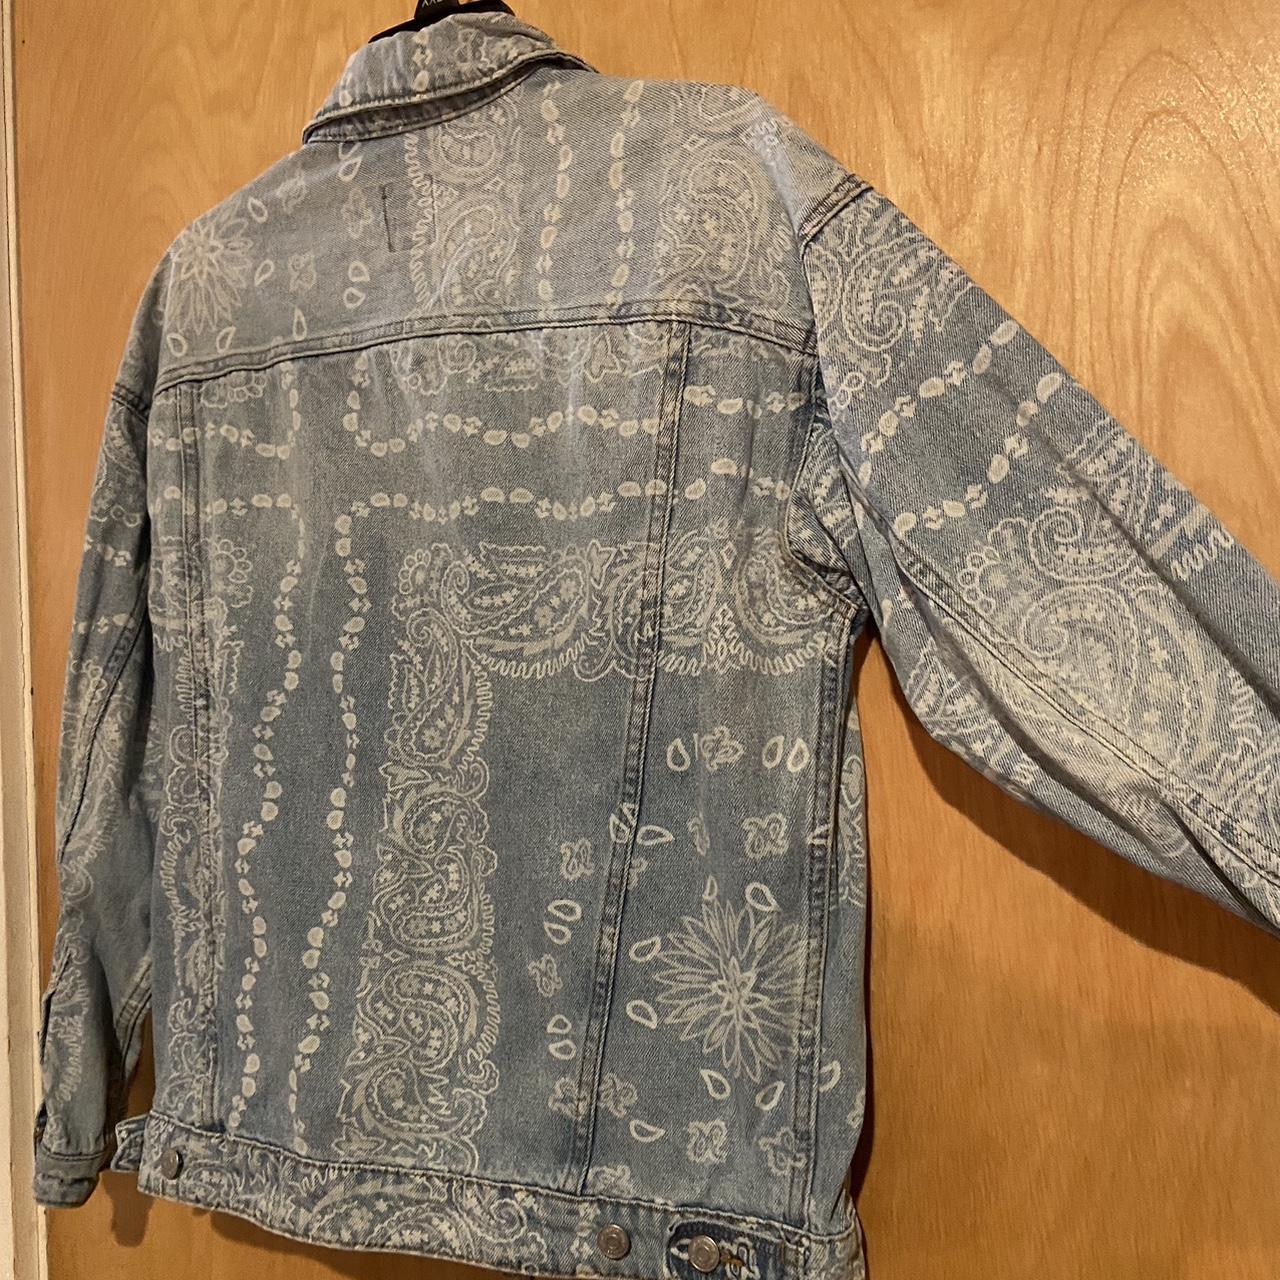 Wild Fable” denim jacket with paisley bleach design - Depop